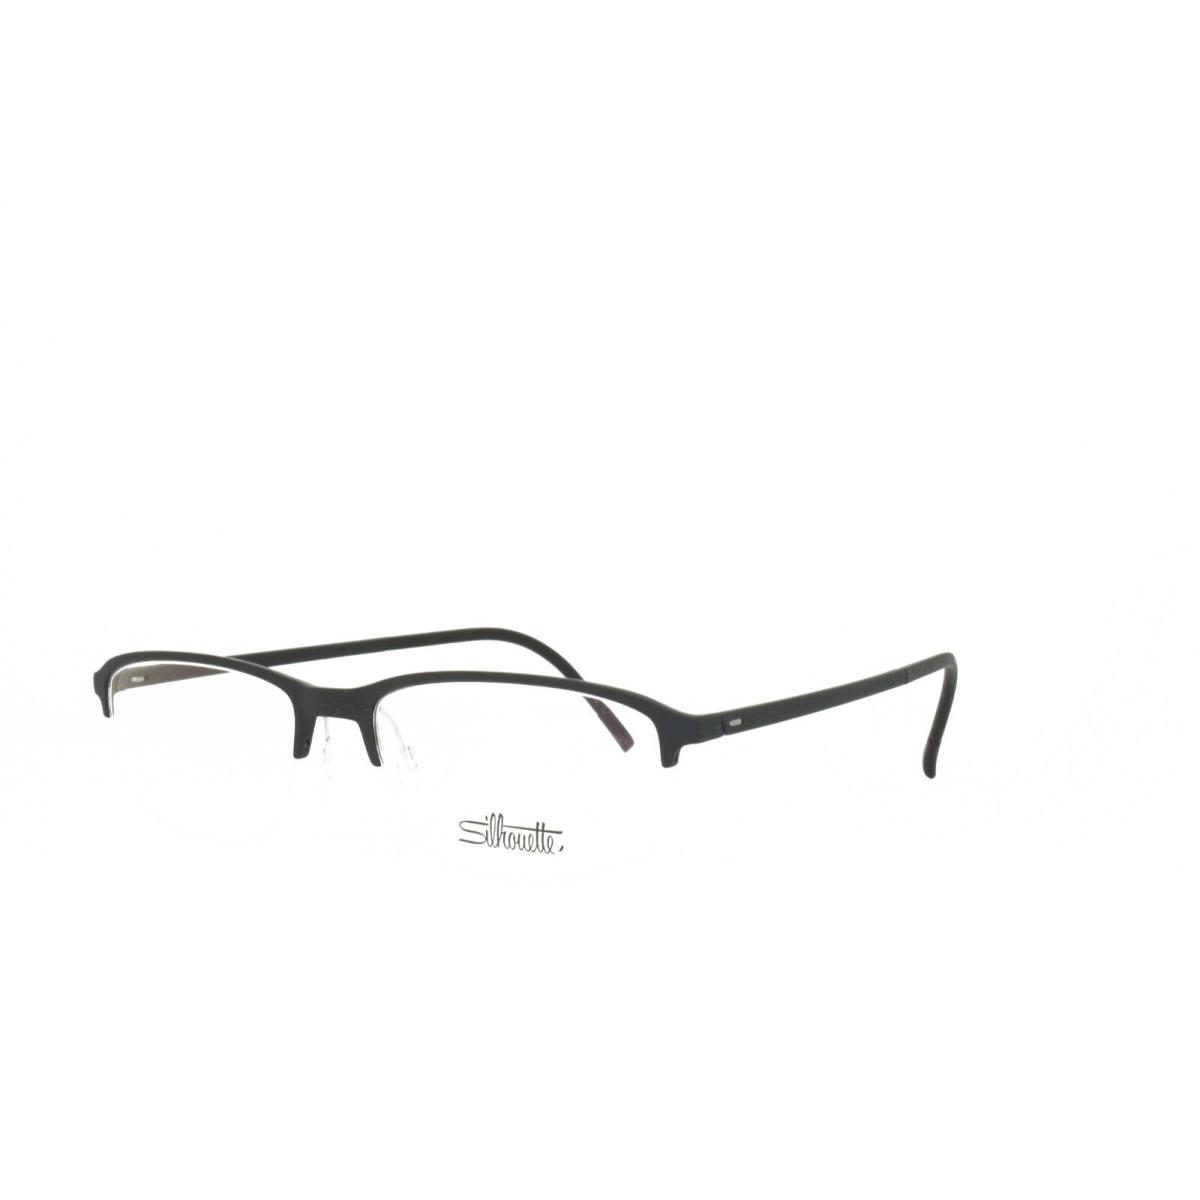 Silhouette Spx Illusion Nylor 2933 75 9110 Eyeglasses 53-17-140 Black